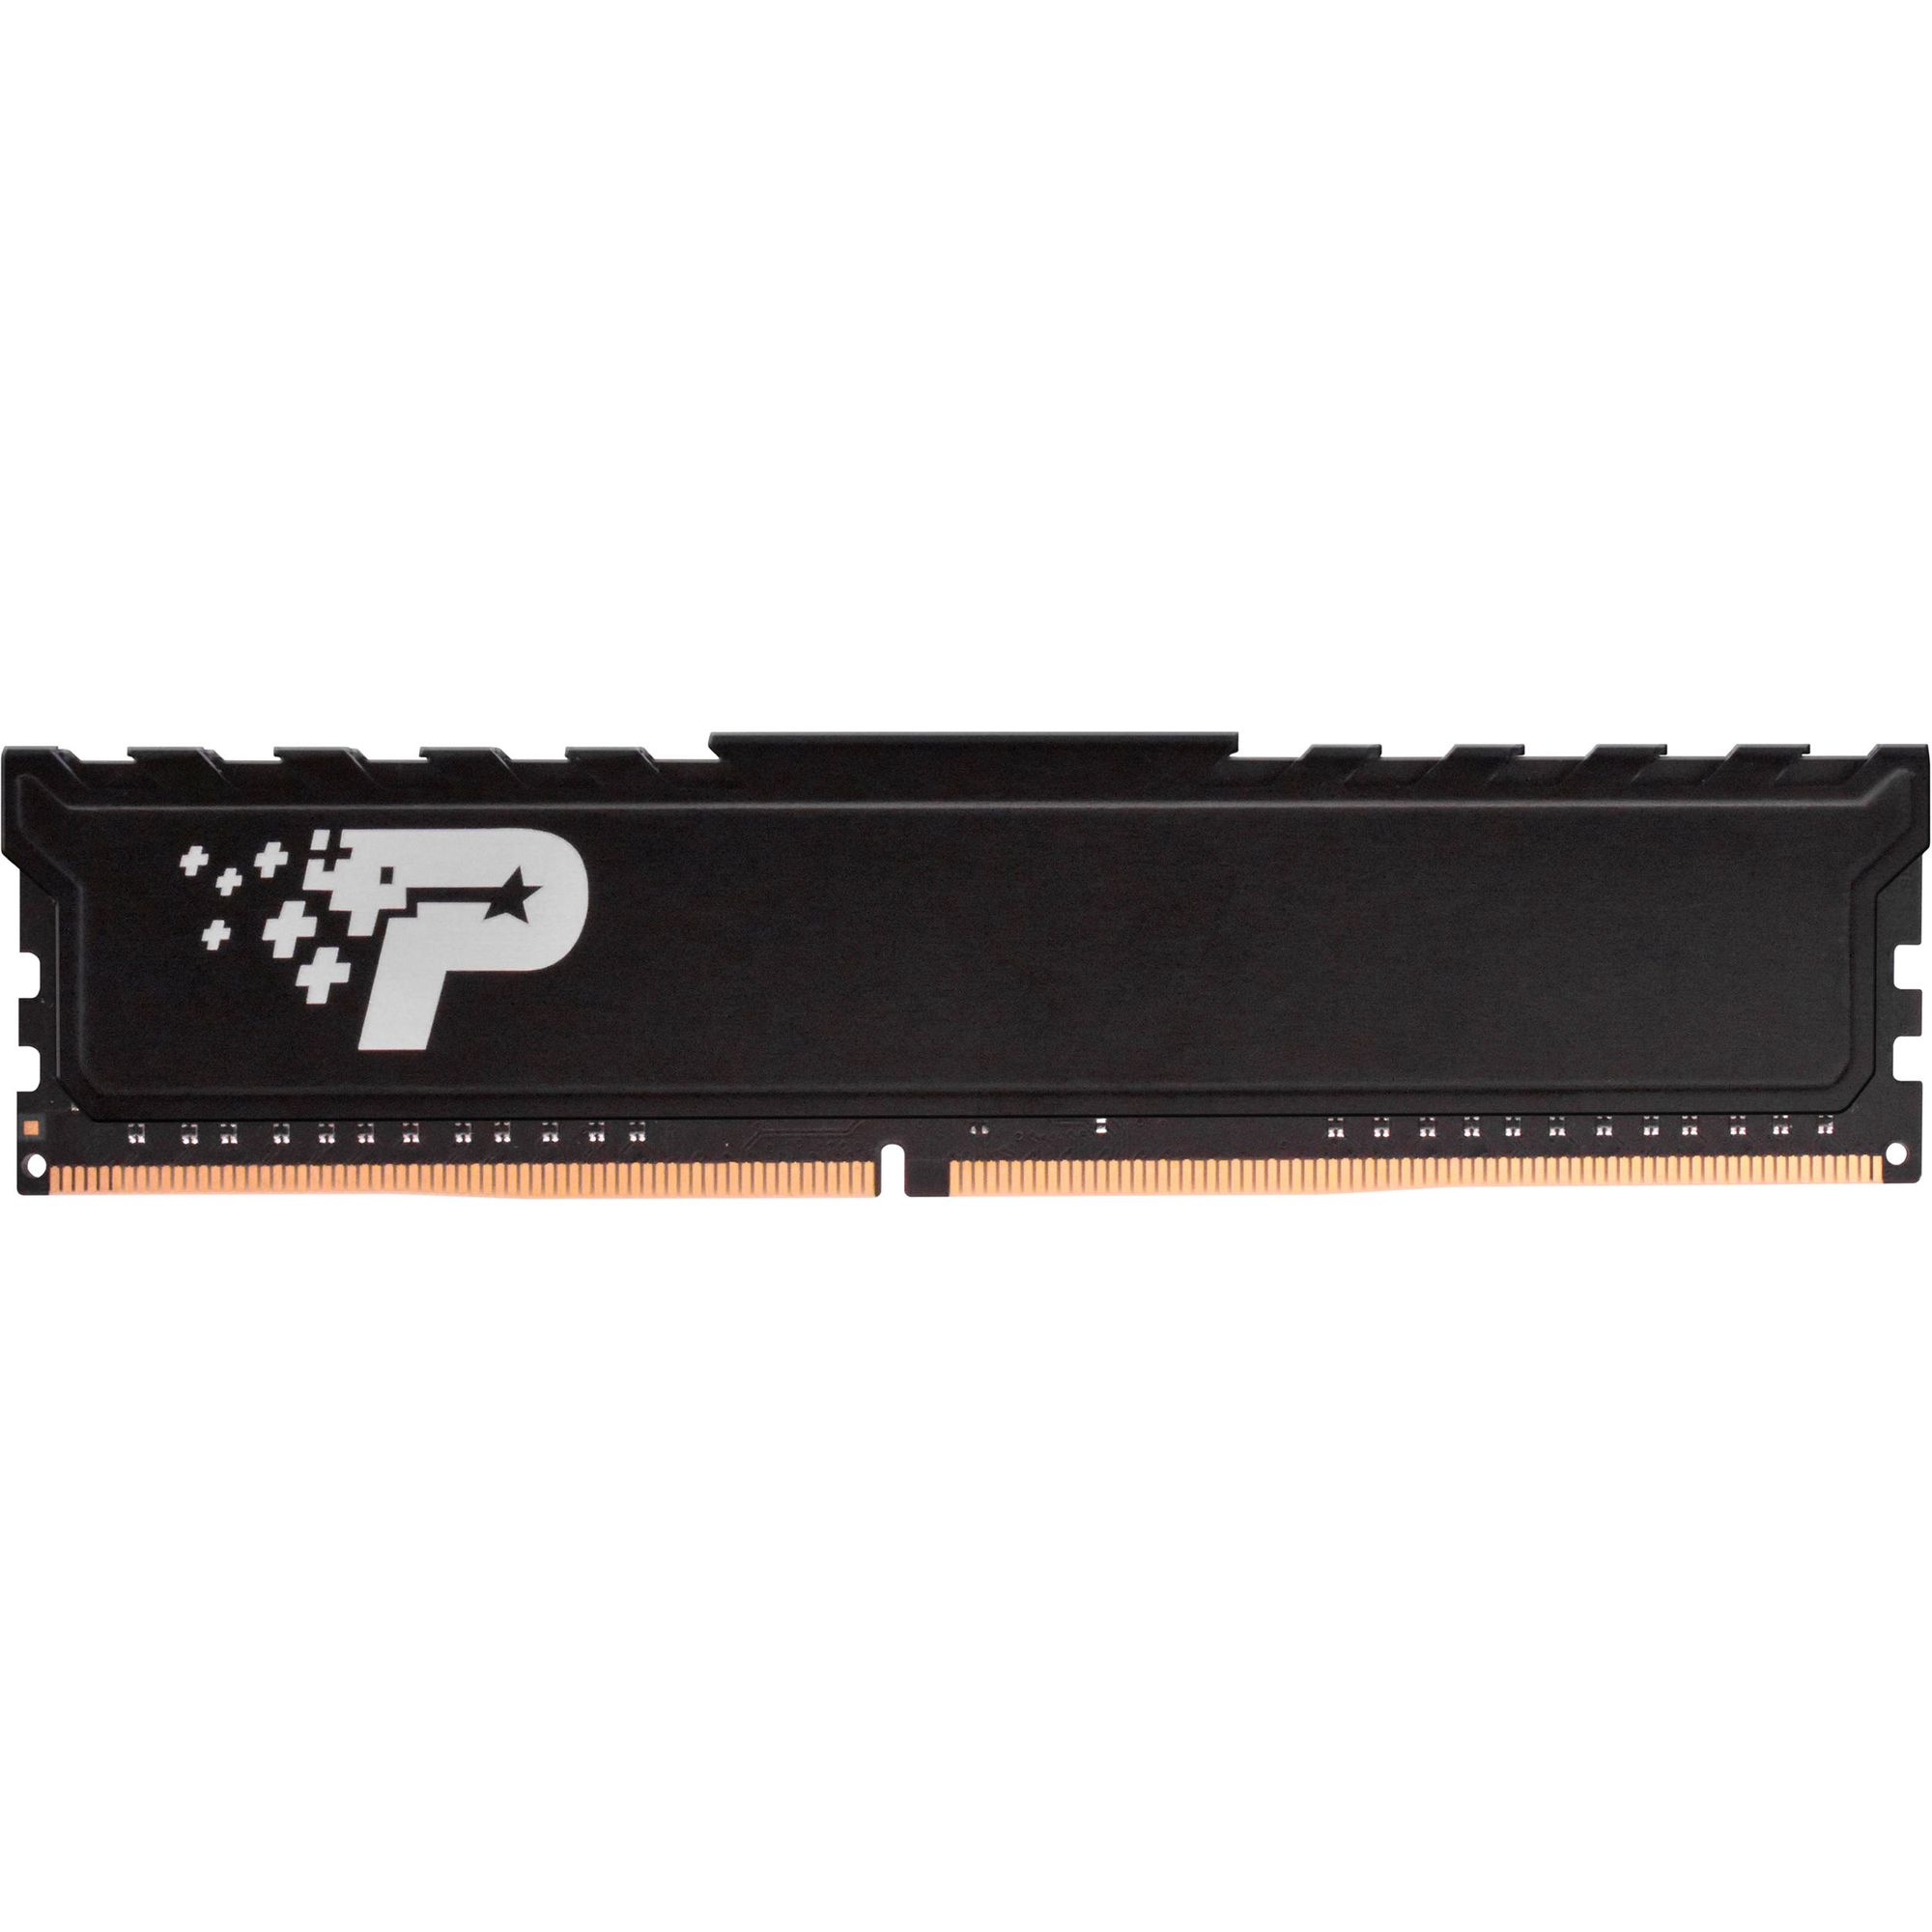 Память оперативная DDR4 Patriot Memory SL Premium 16Gb 2666MHz (PSP416G26662H1) цена и фото